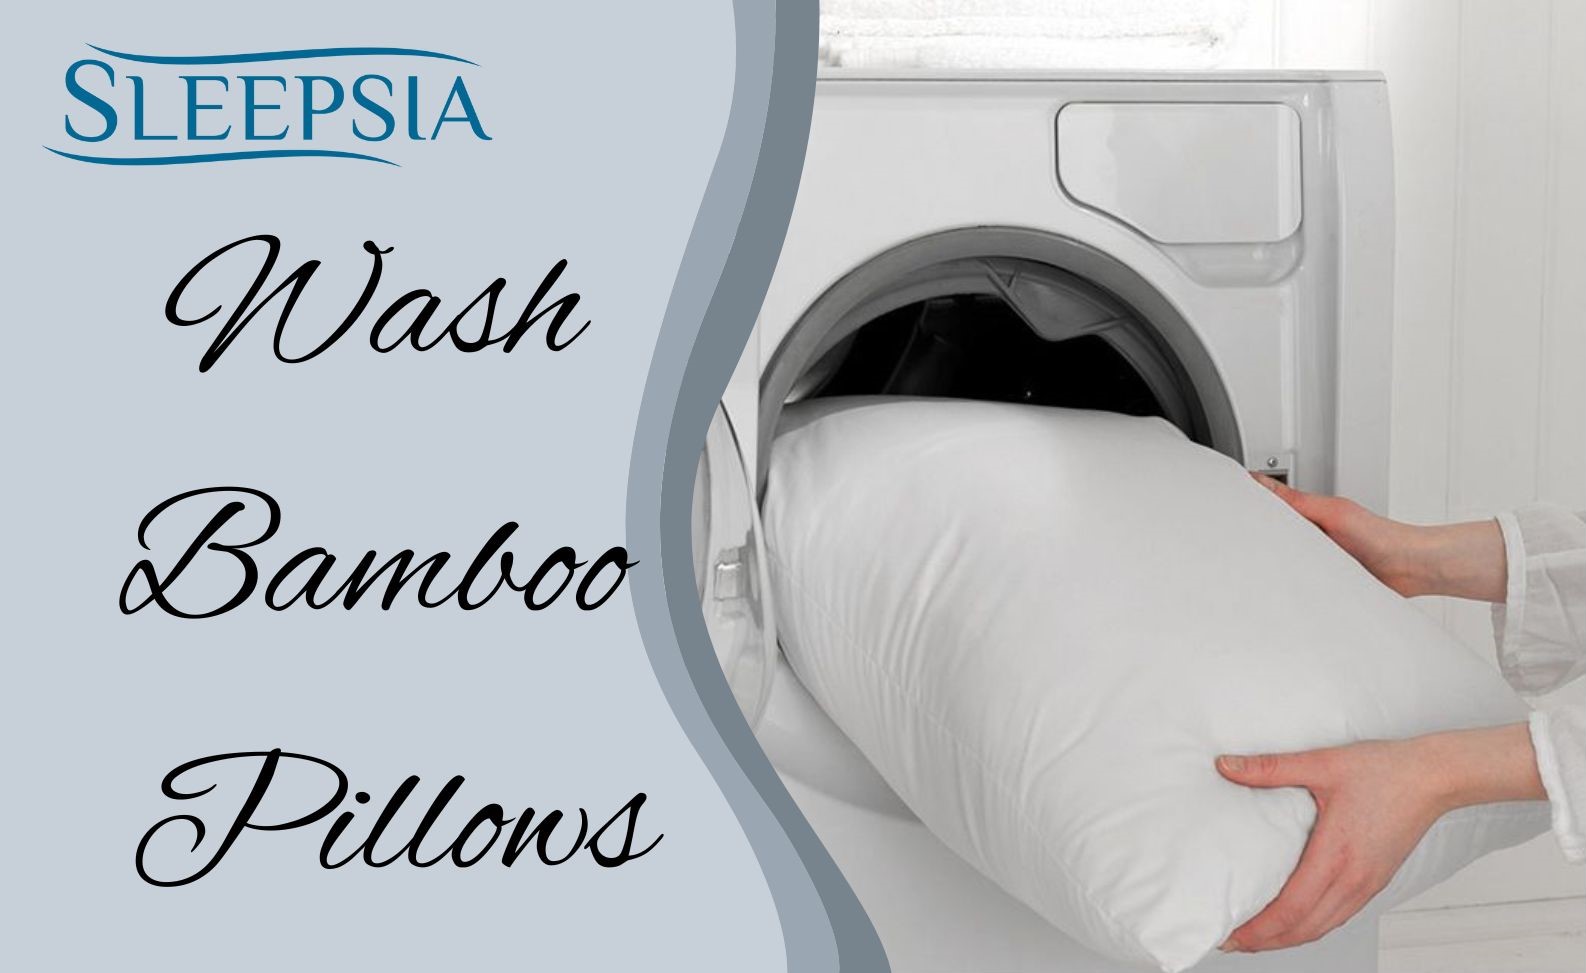 Wash Bamboo Pillows